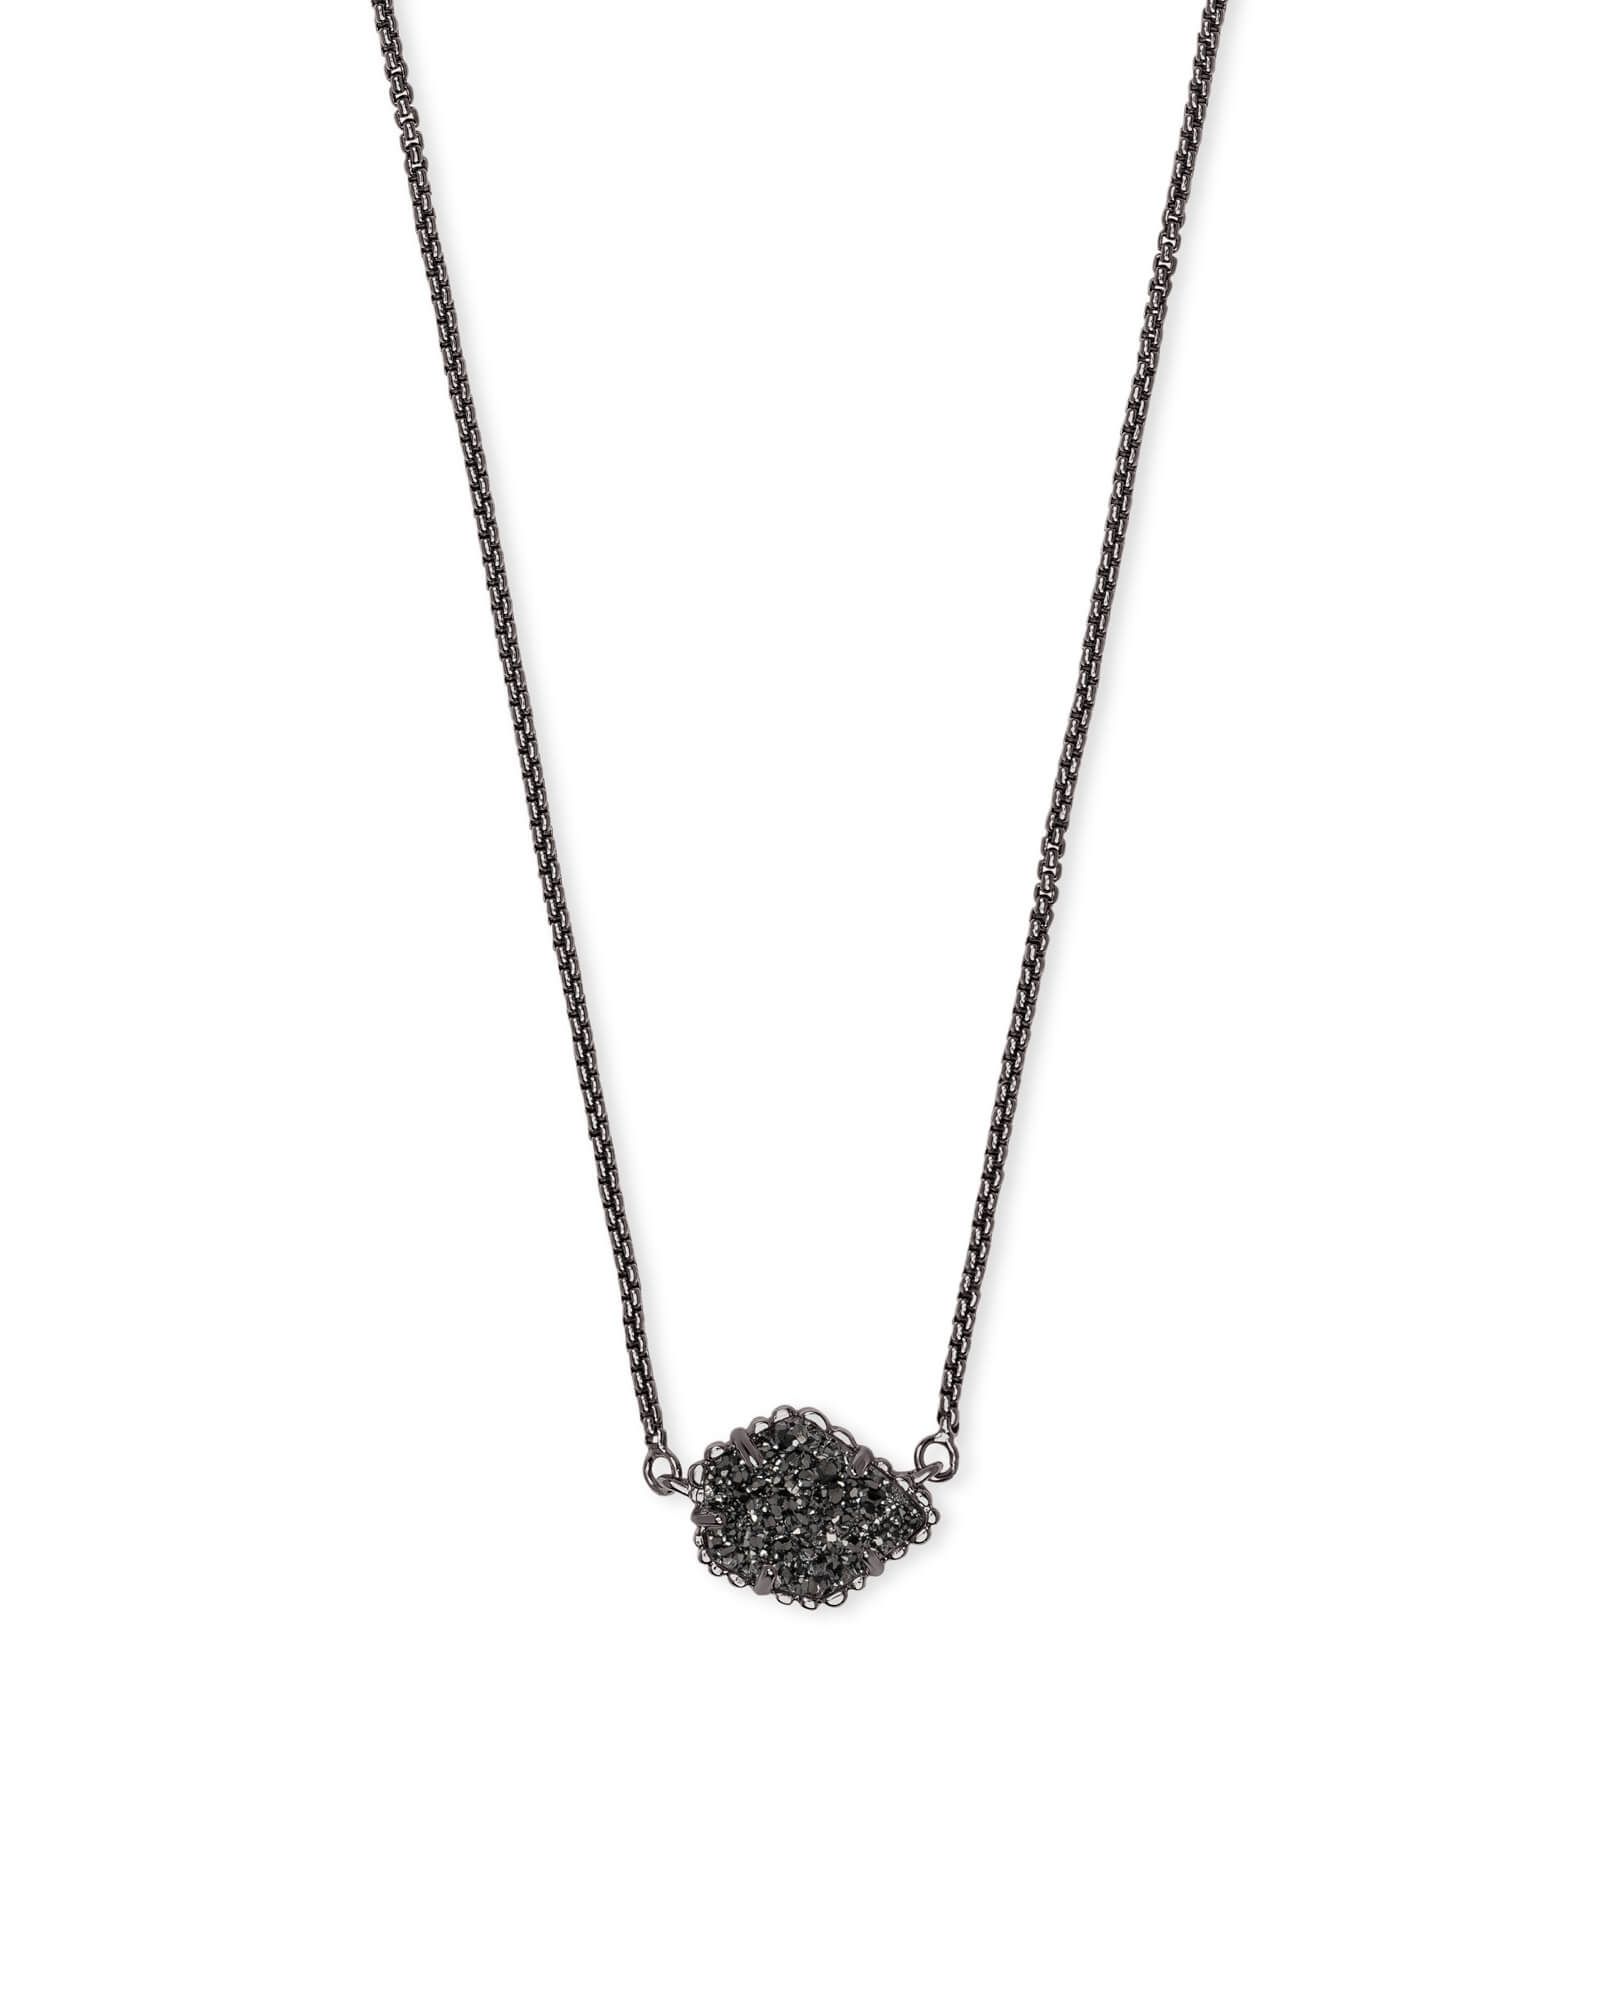 Tess Gunmetal Pendant Necklace in Black Drusy | Kendra Scott | Kendra Scott